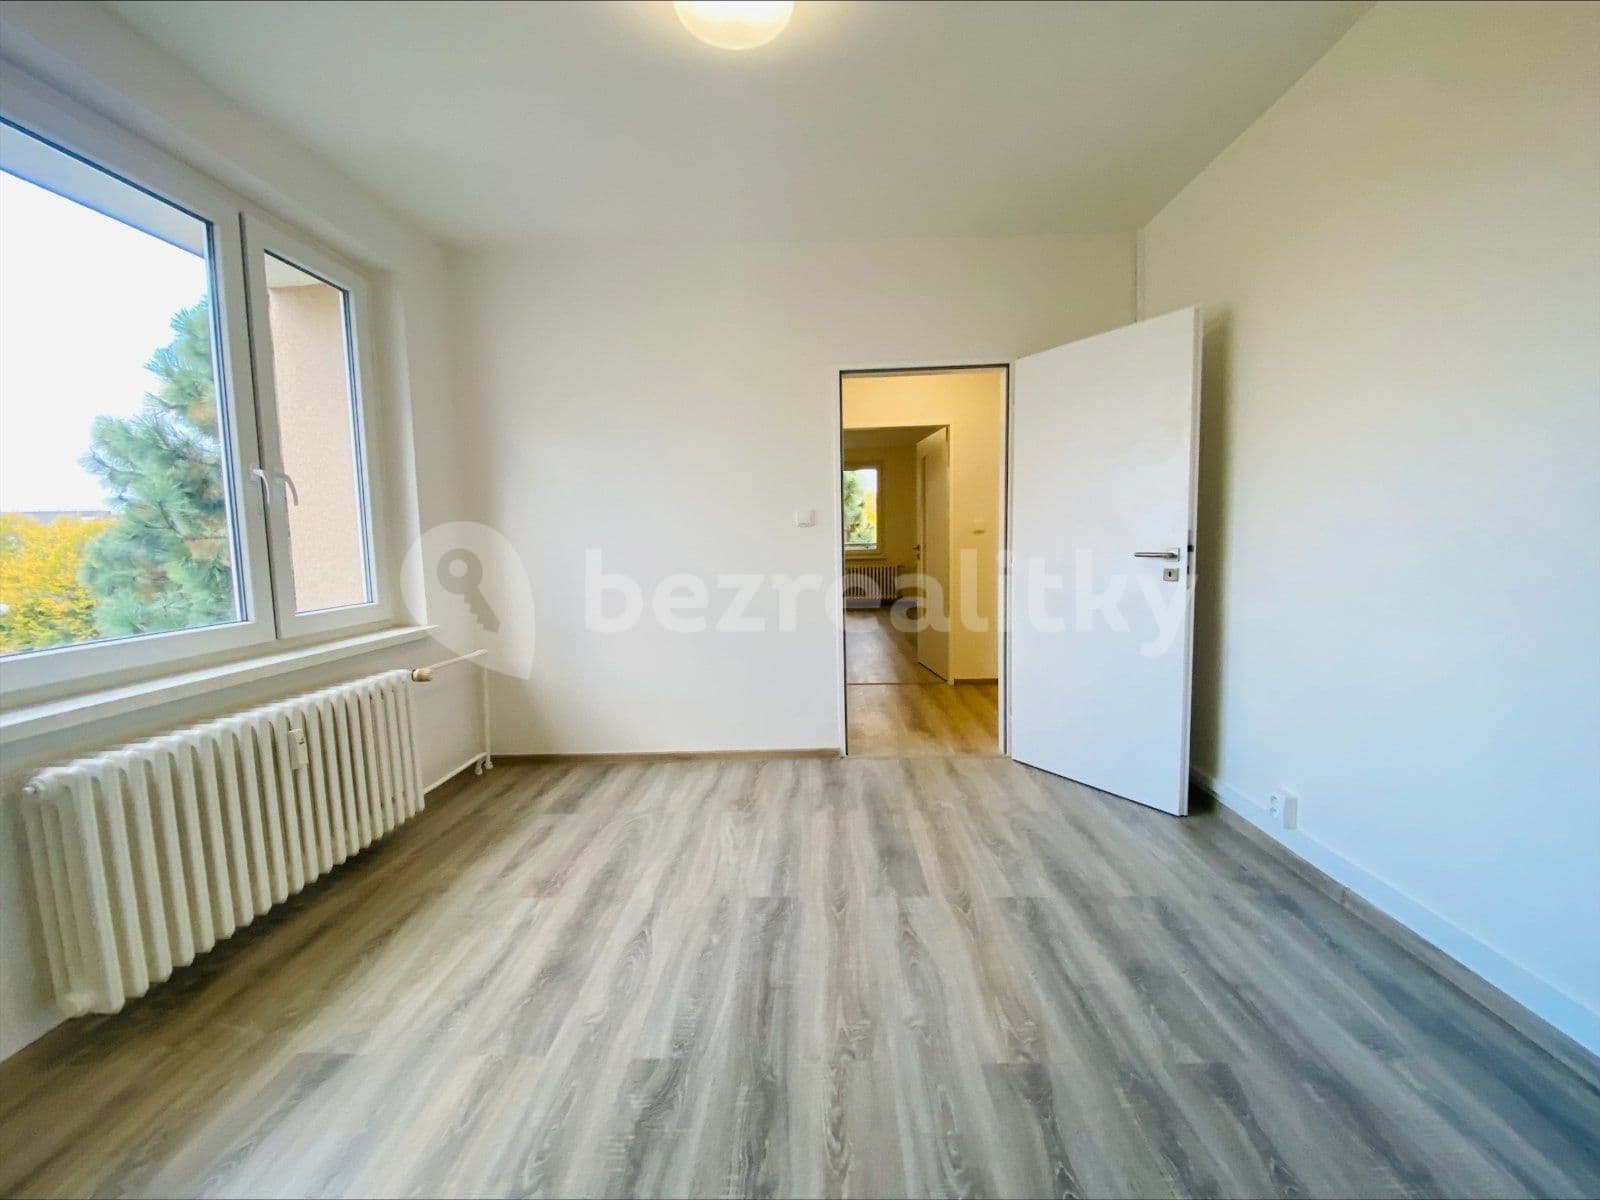 3 bedroom flat to rent, 76 m², Ostrčilova, Ostrava, Moravskoslezský Region